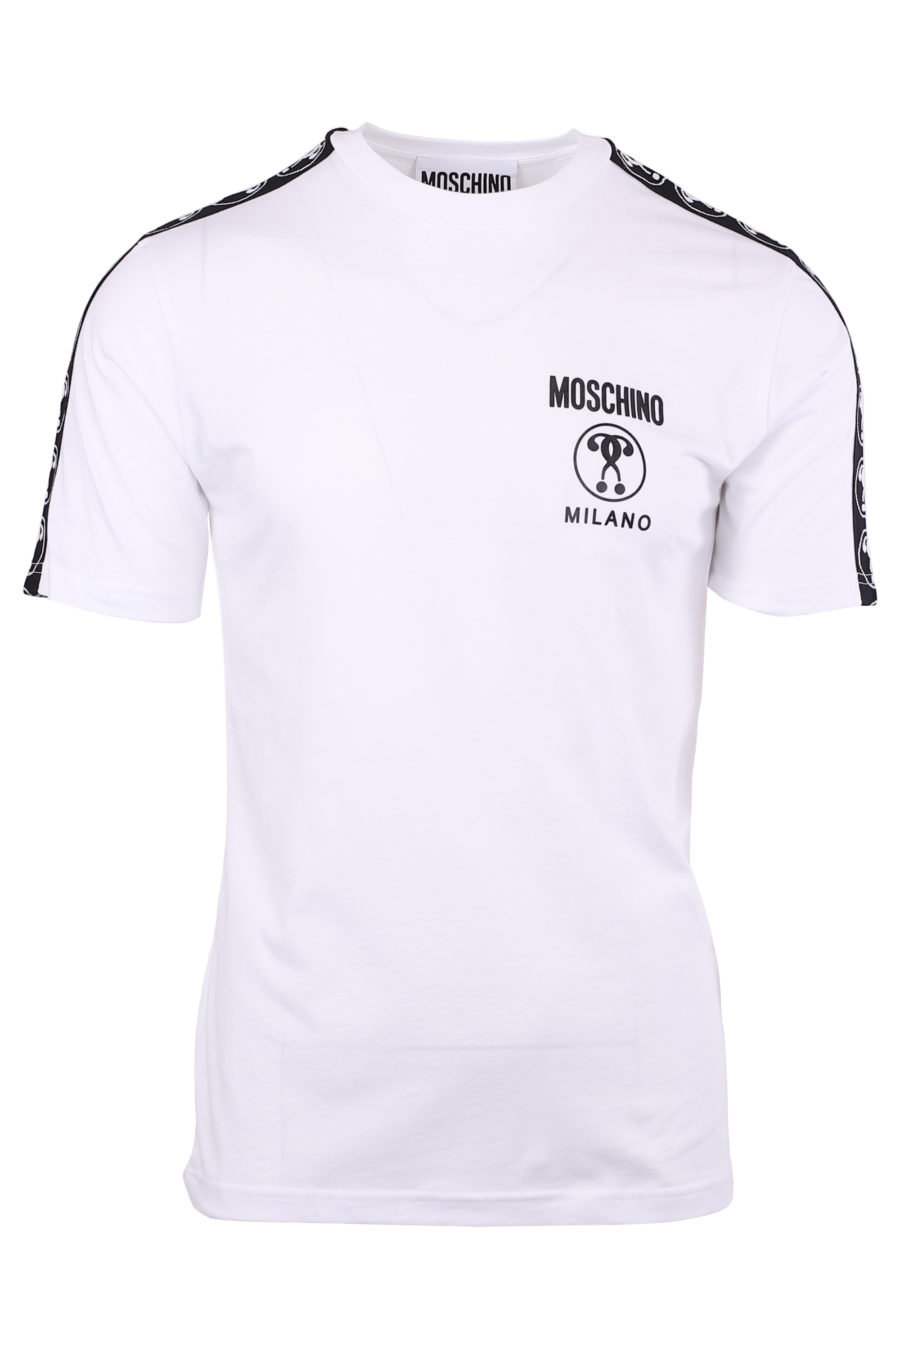 Camiseta blanca logo negro parte delantera y mangas - IMG 9968